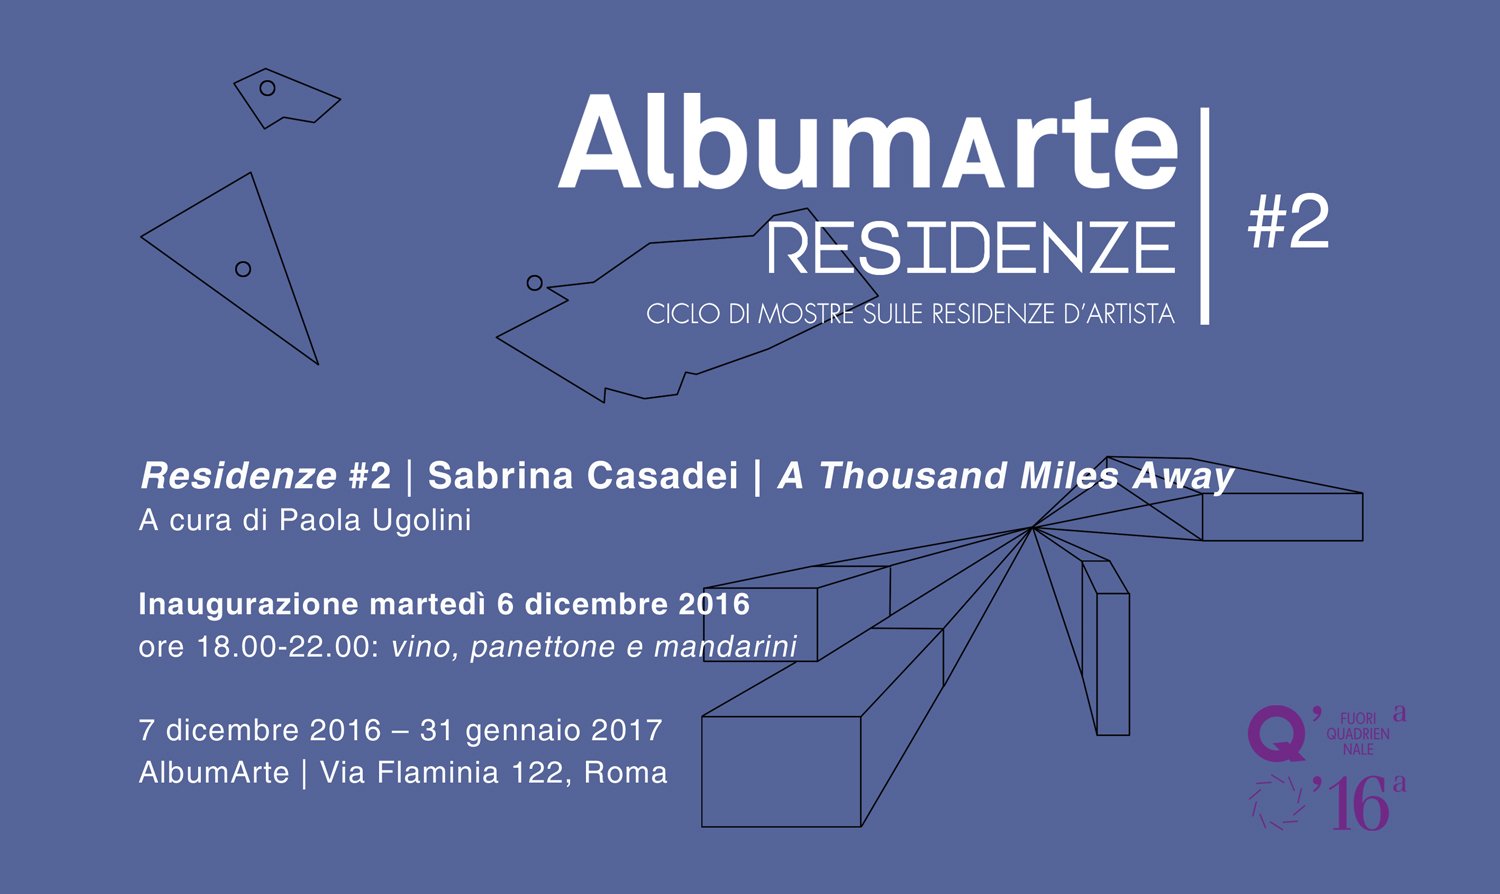 Residenze #2 - Sabrina Casadei